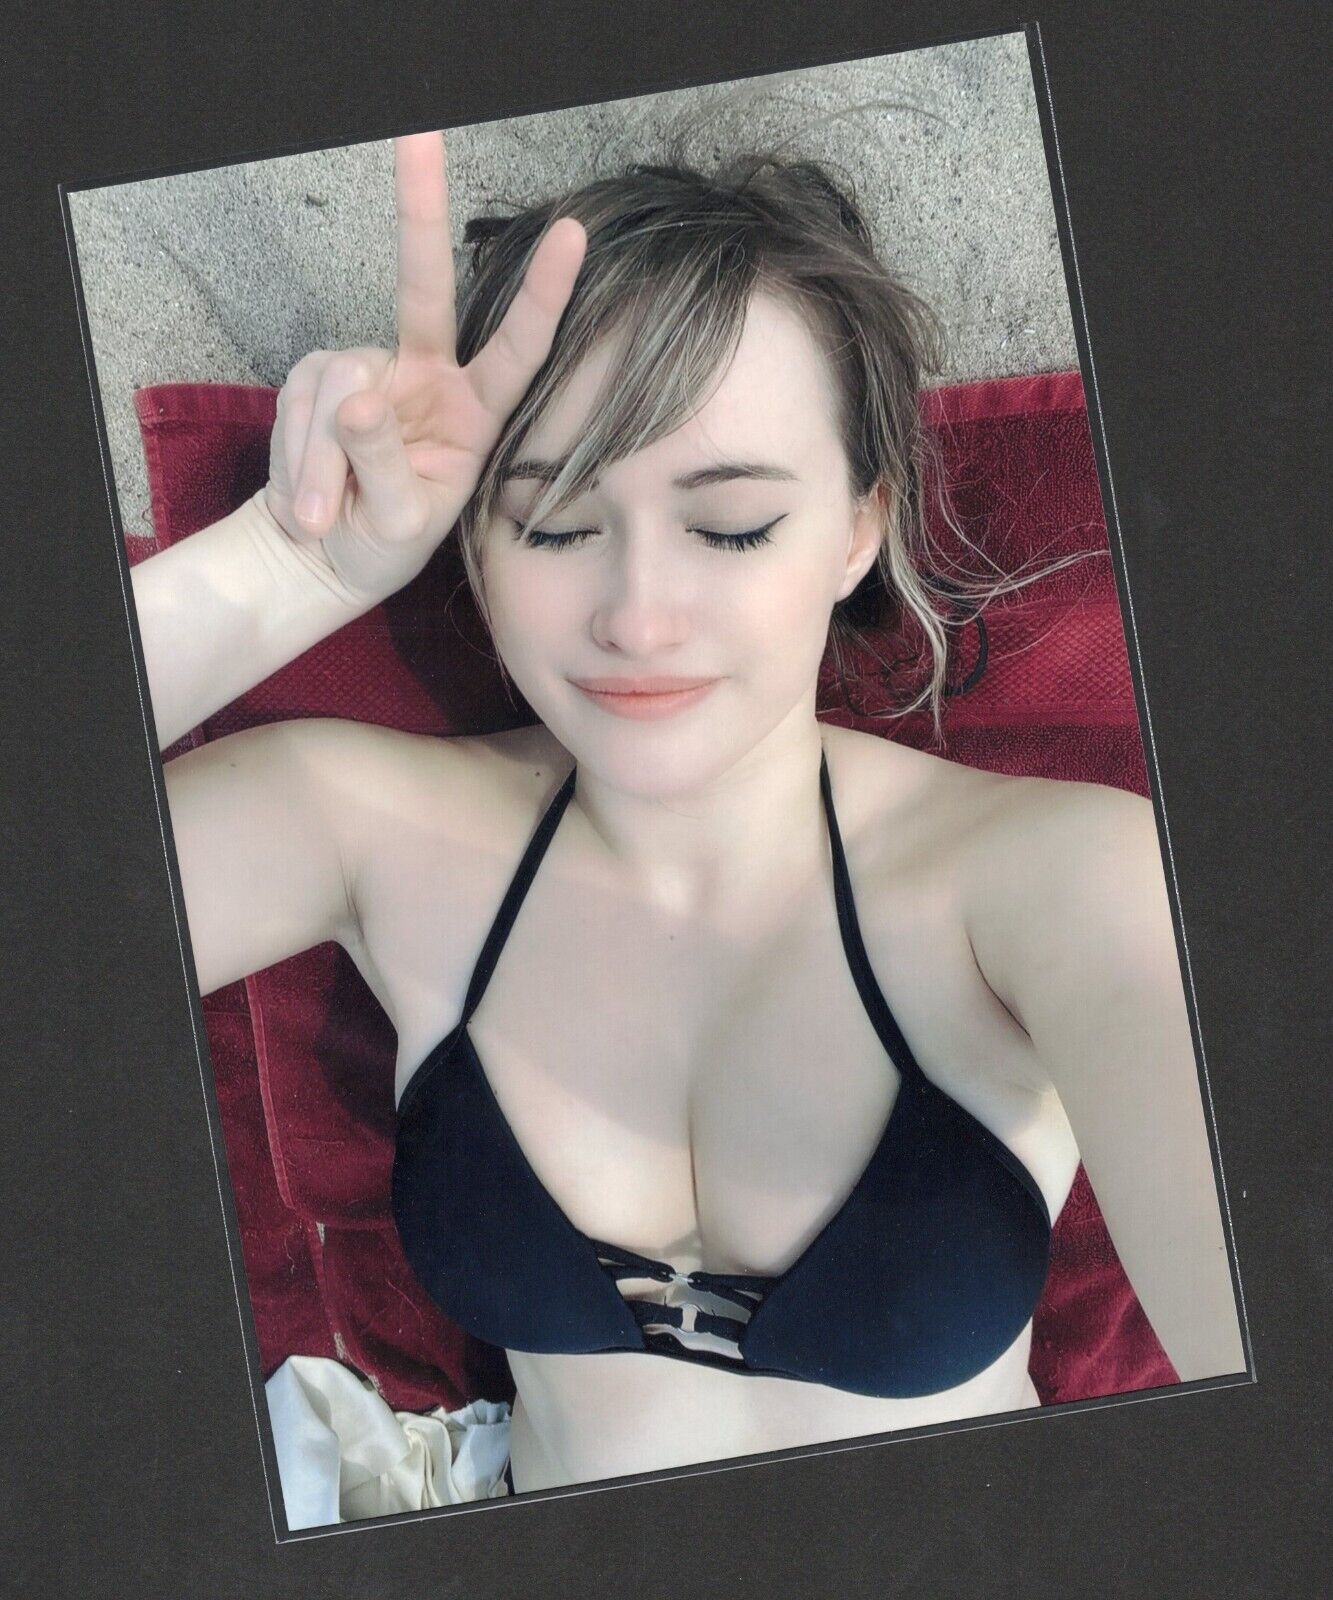 5x7 Pretty Woman Sunbathing V Sign Bikini Cleavage Fine Art Glossy Photo